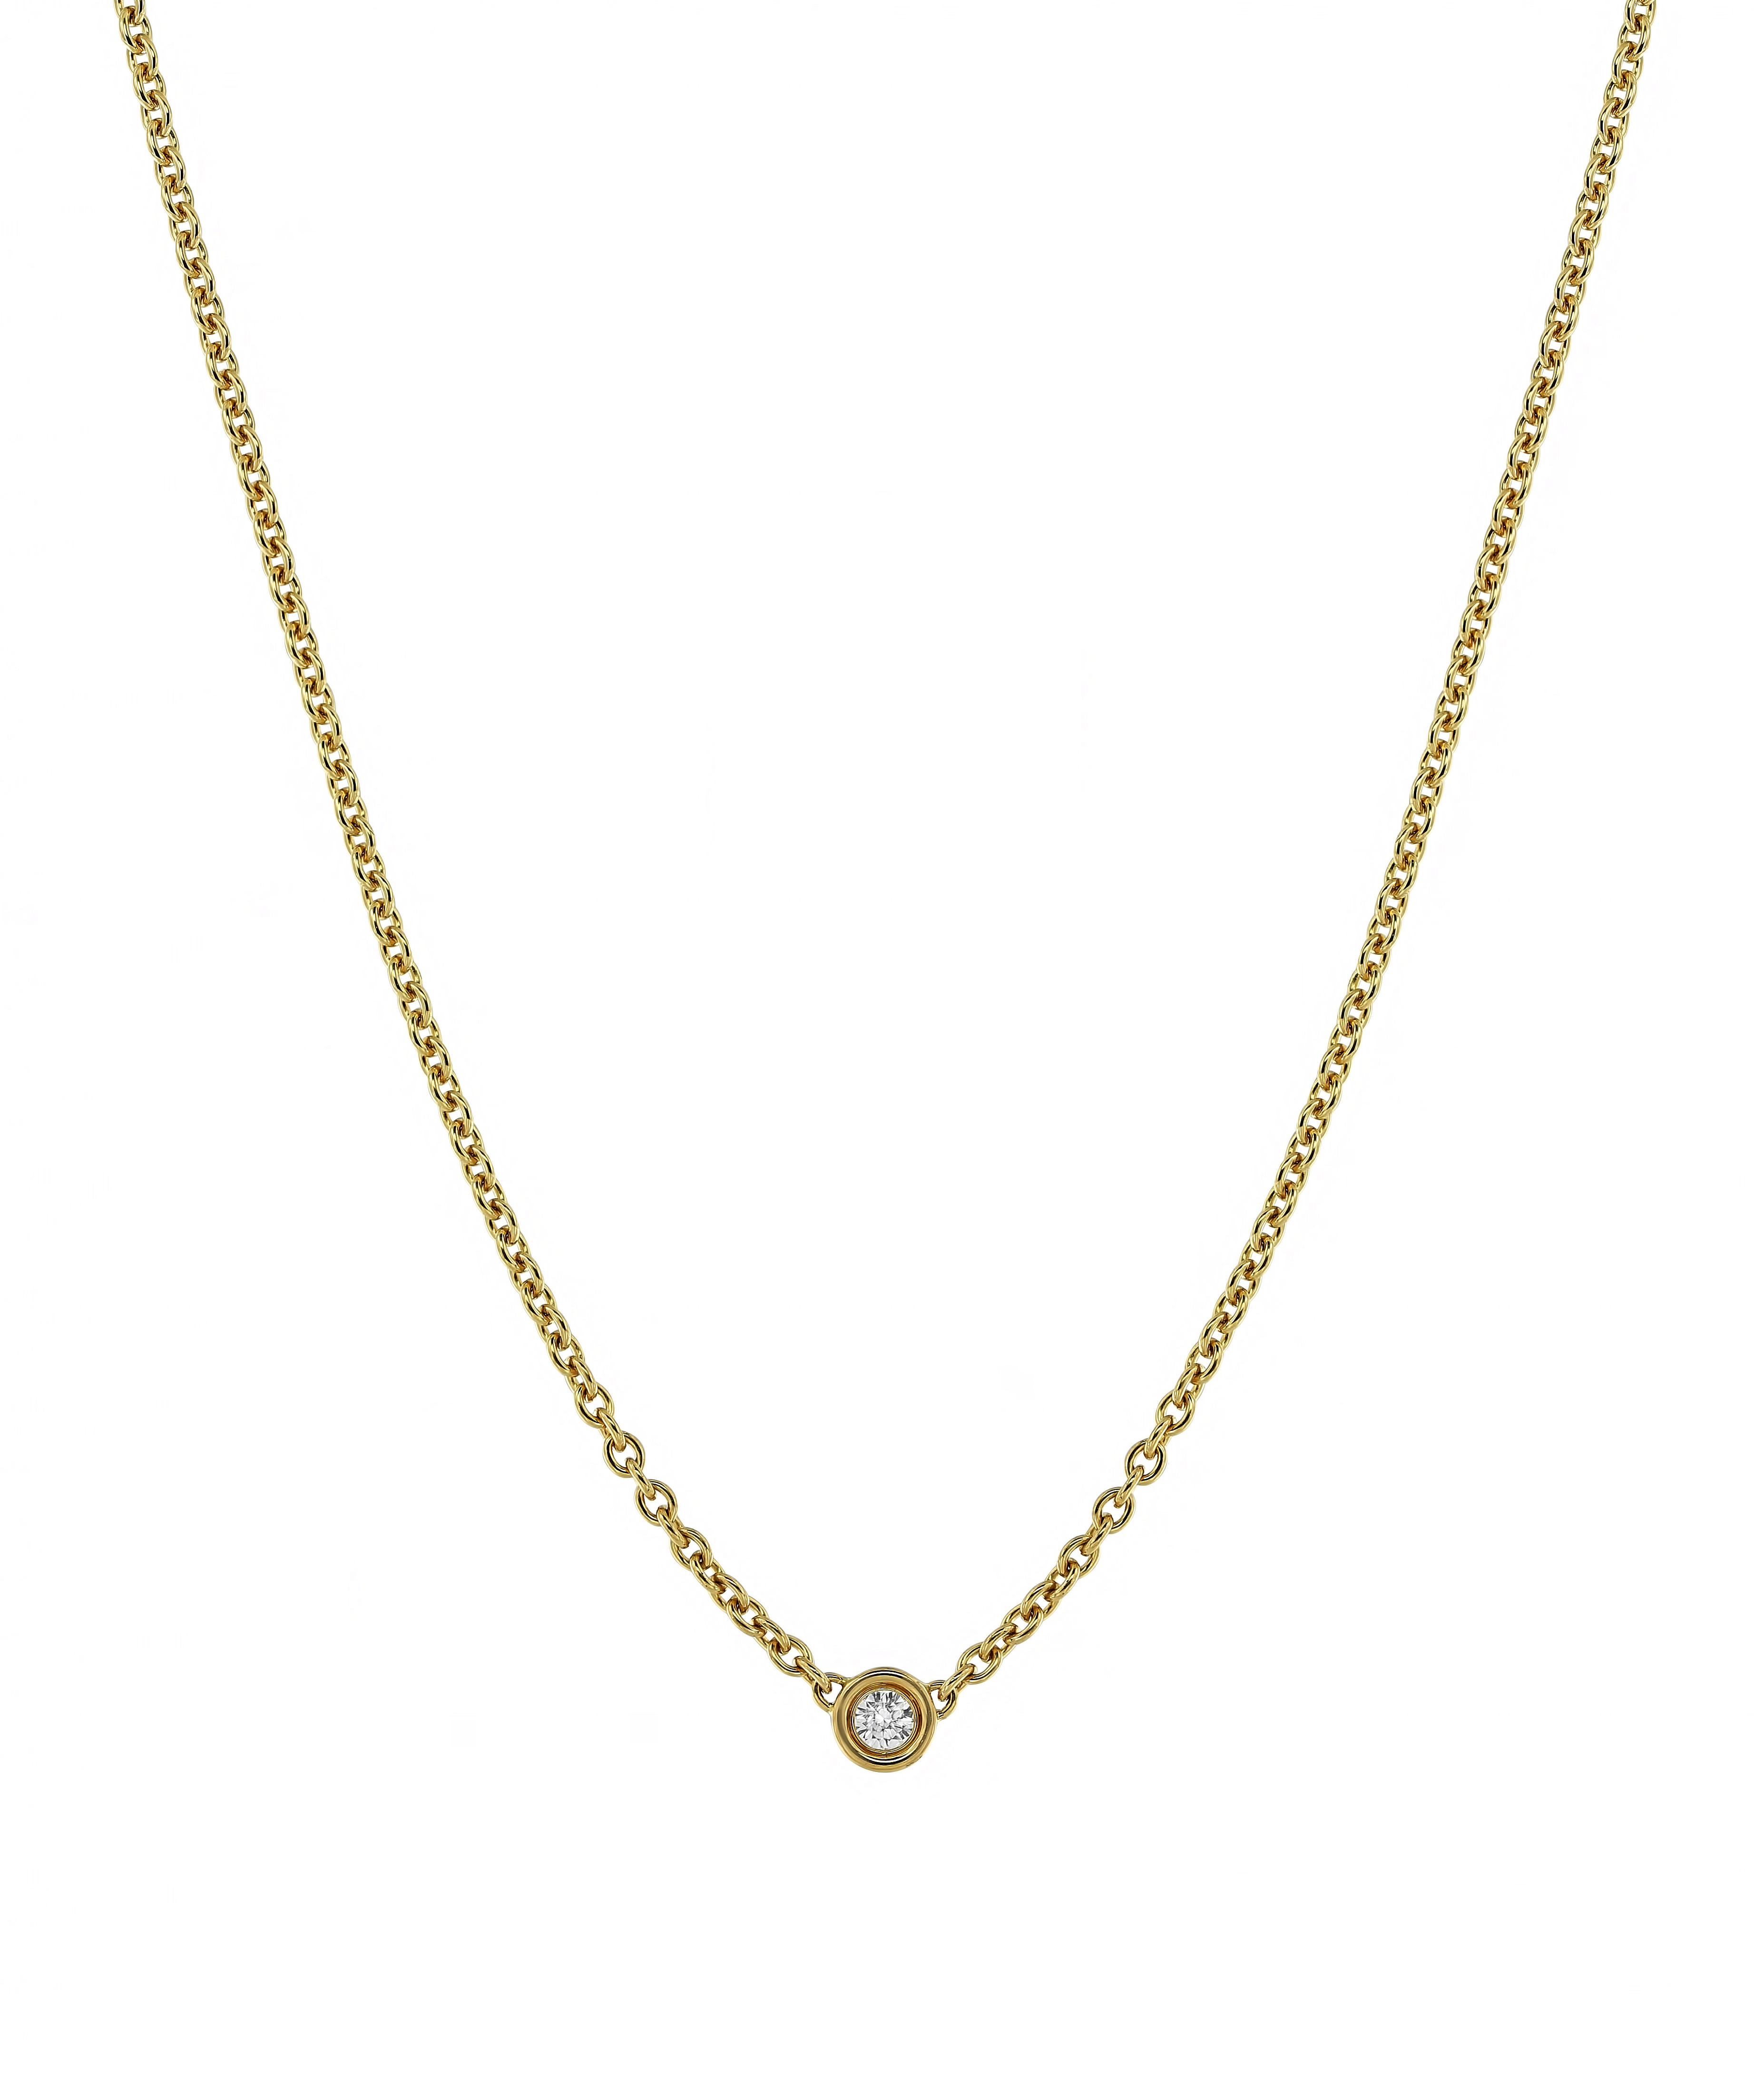 Tiny gold diamond necklace ep 4pgm2i